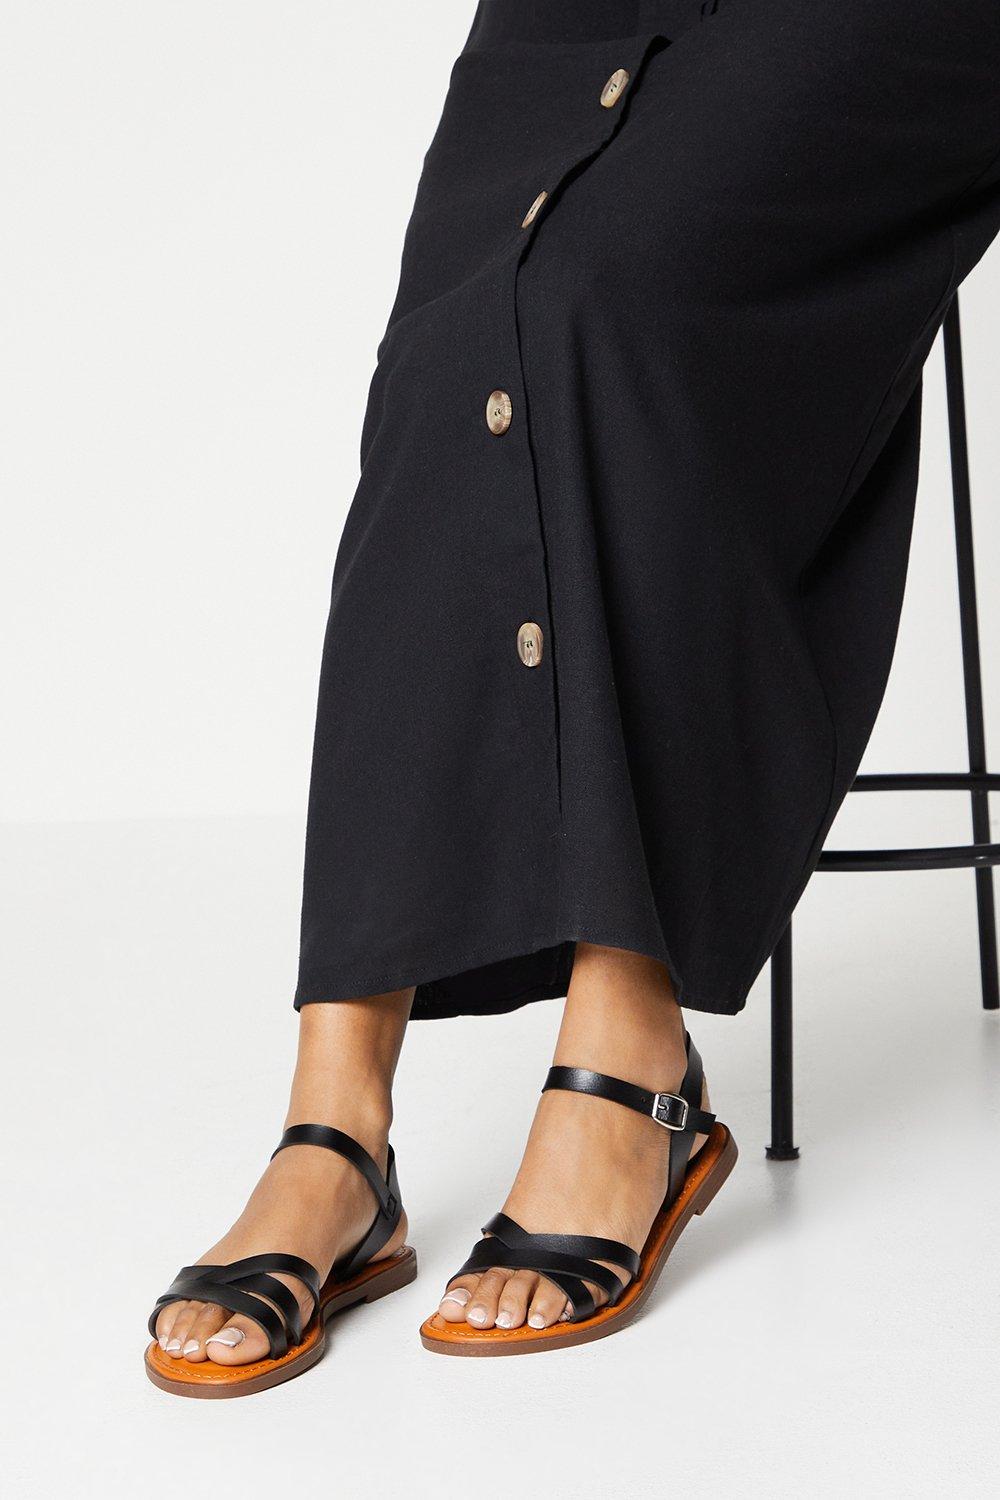 Women's Good For The Sole: Melanie Comfort Cross Strap Flat Sandals - black - 3